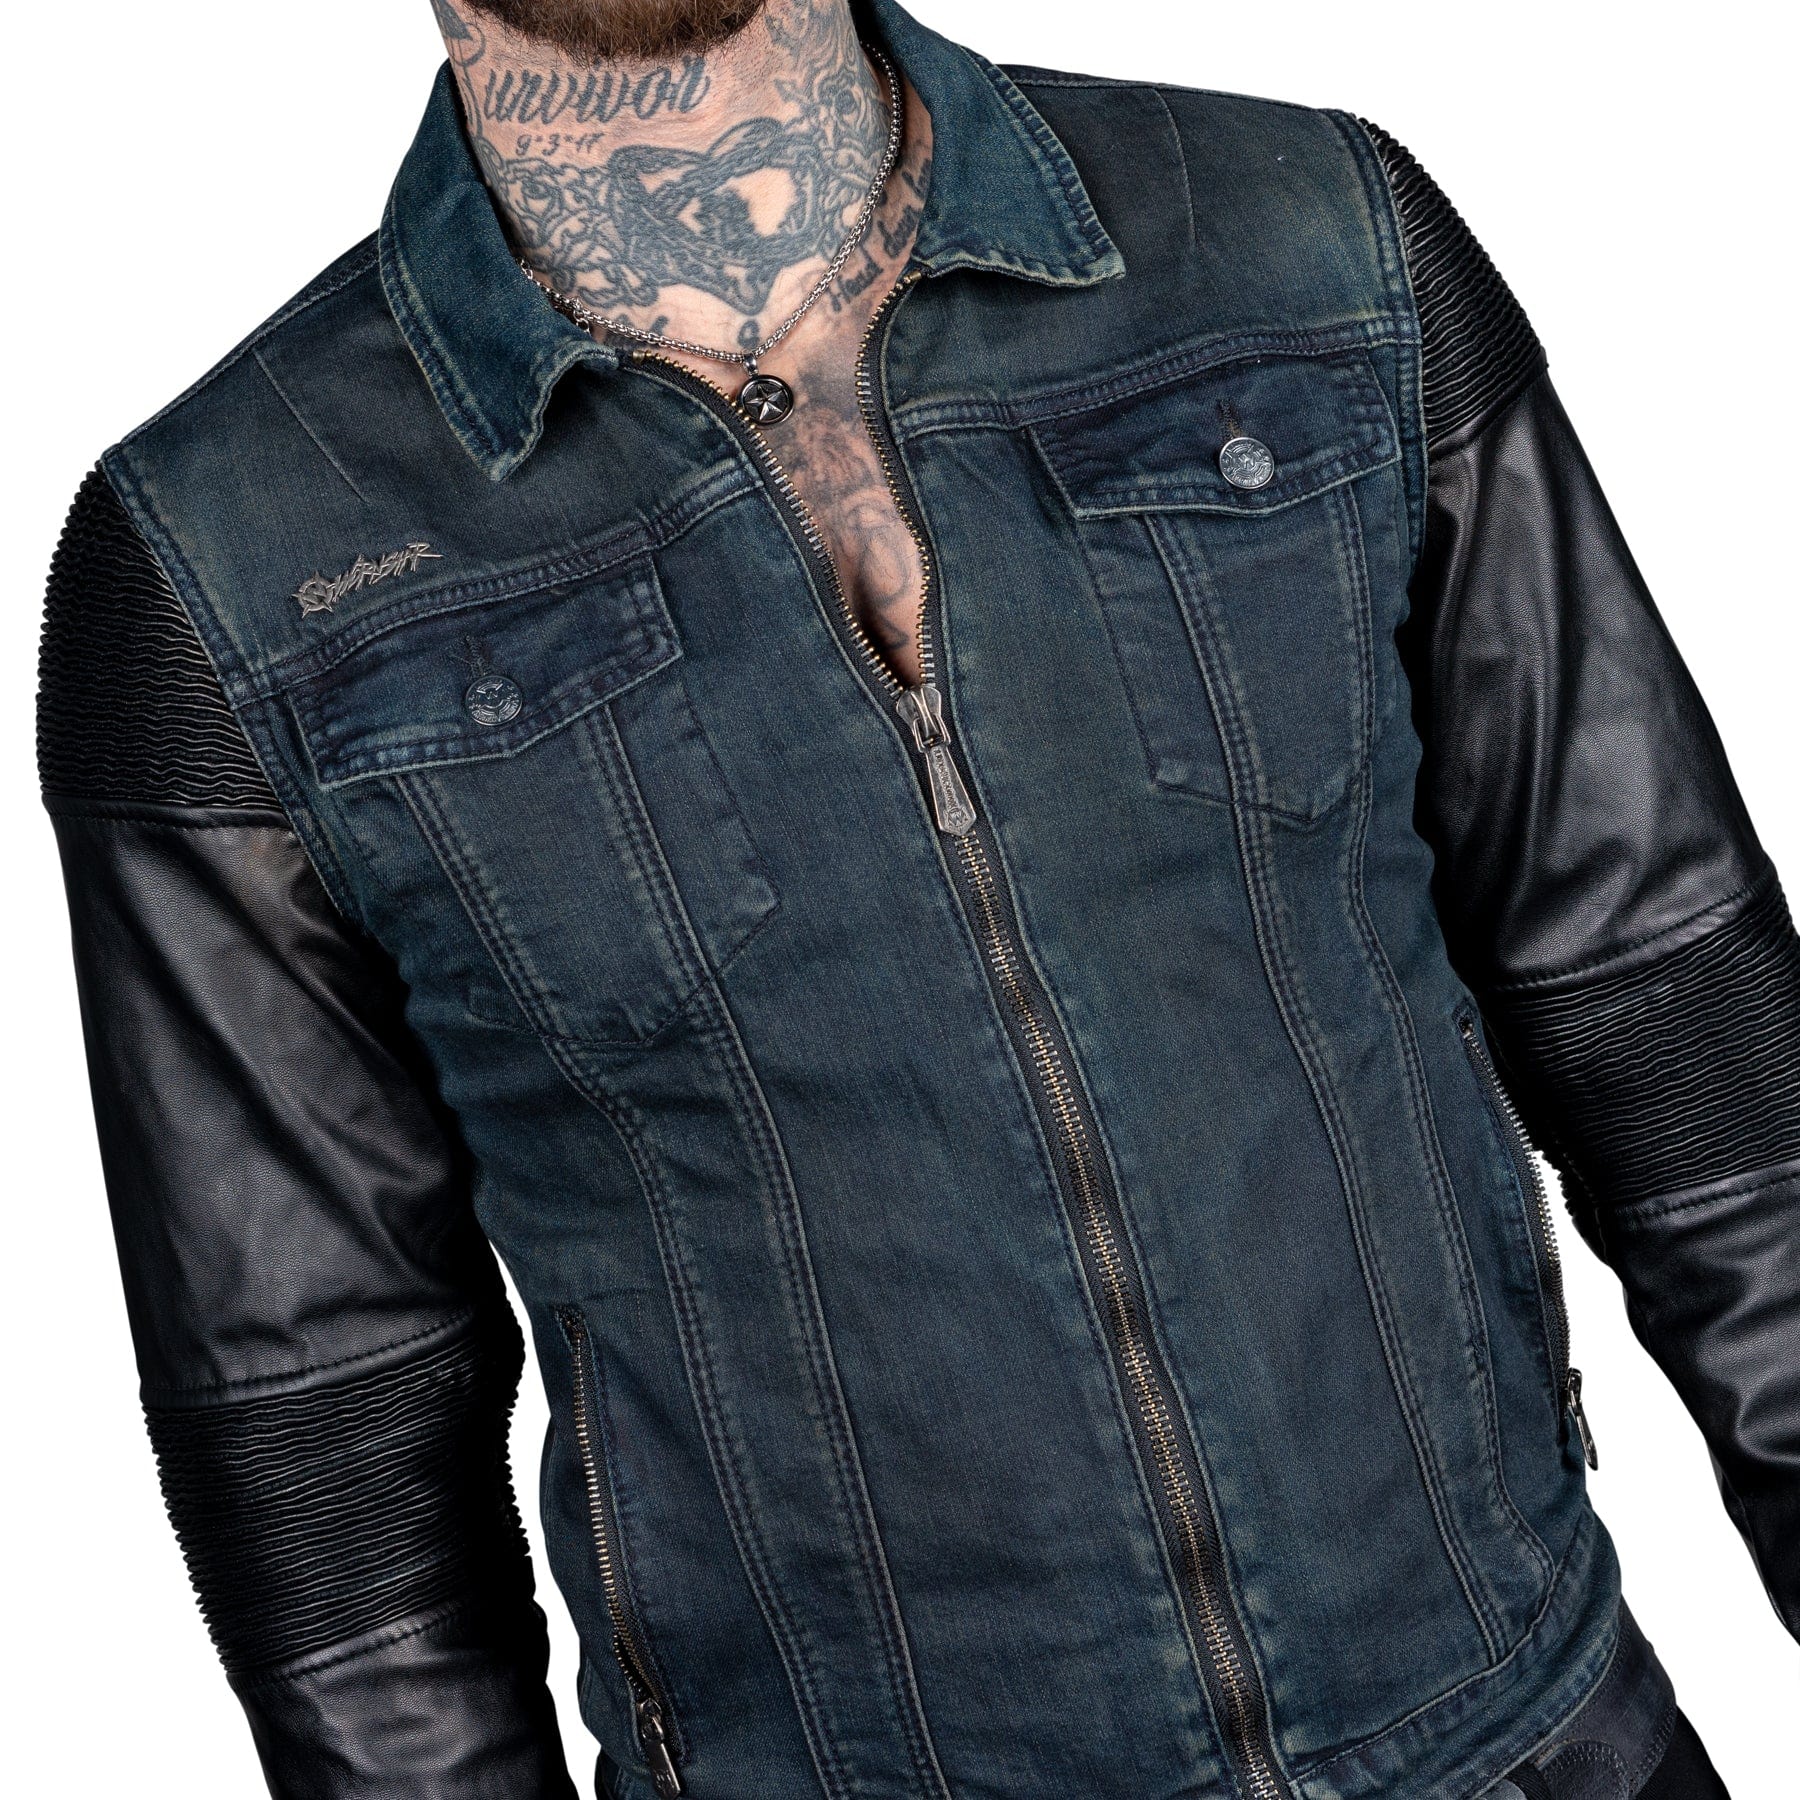 Wornstar Clothing Mens Jacket. Nightcrawler Denim Jacket - Midnight Blue and Black